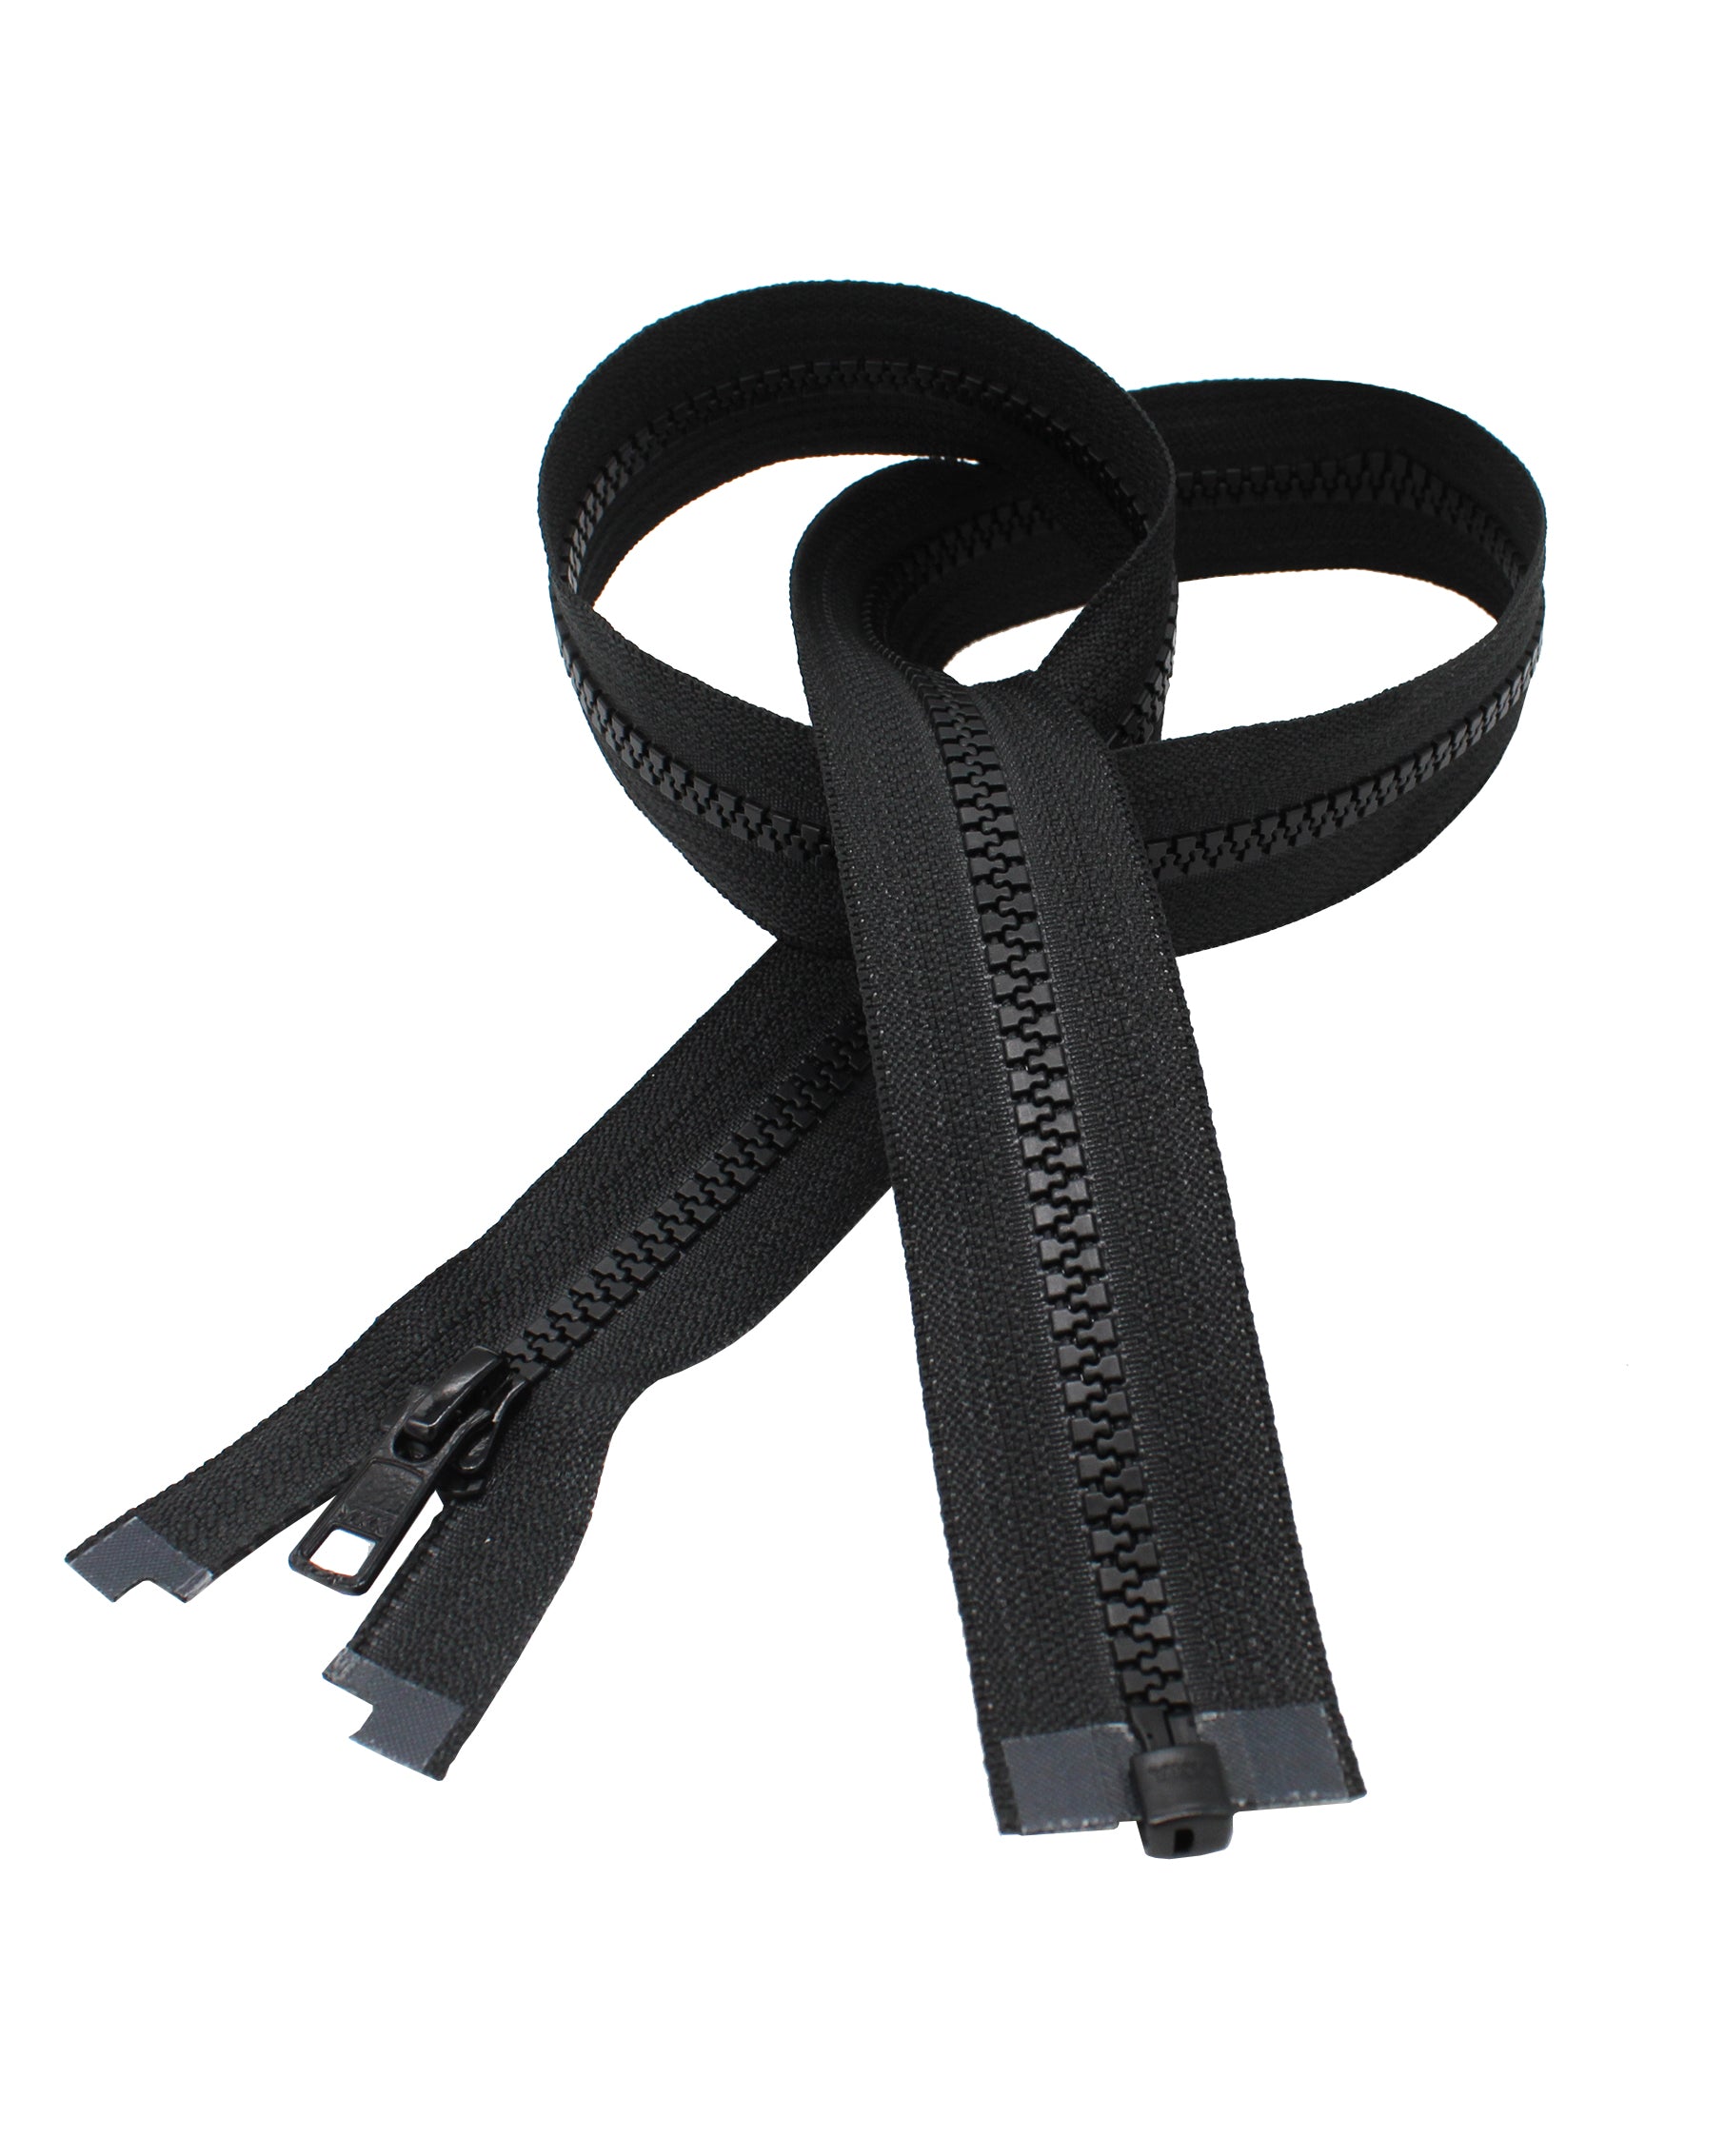 Mandala Crafts #5 Plastic Zipper - 5 PCs Black 33 Inches Separating Zippers  for Sewing - Jacket Zipper Separating Zipper Replacement Zippers for